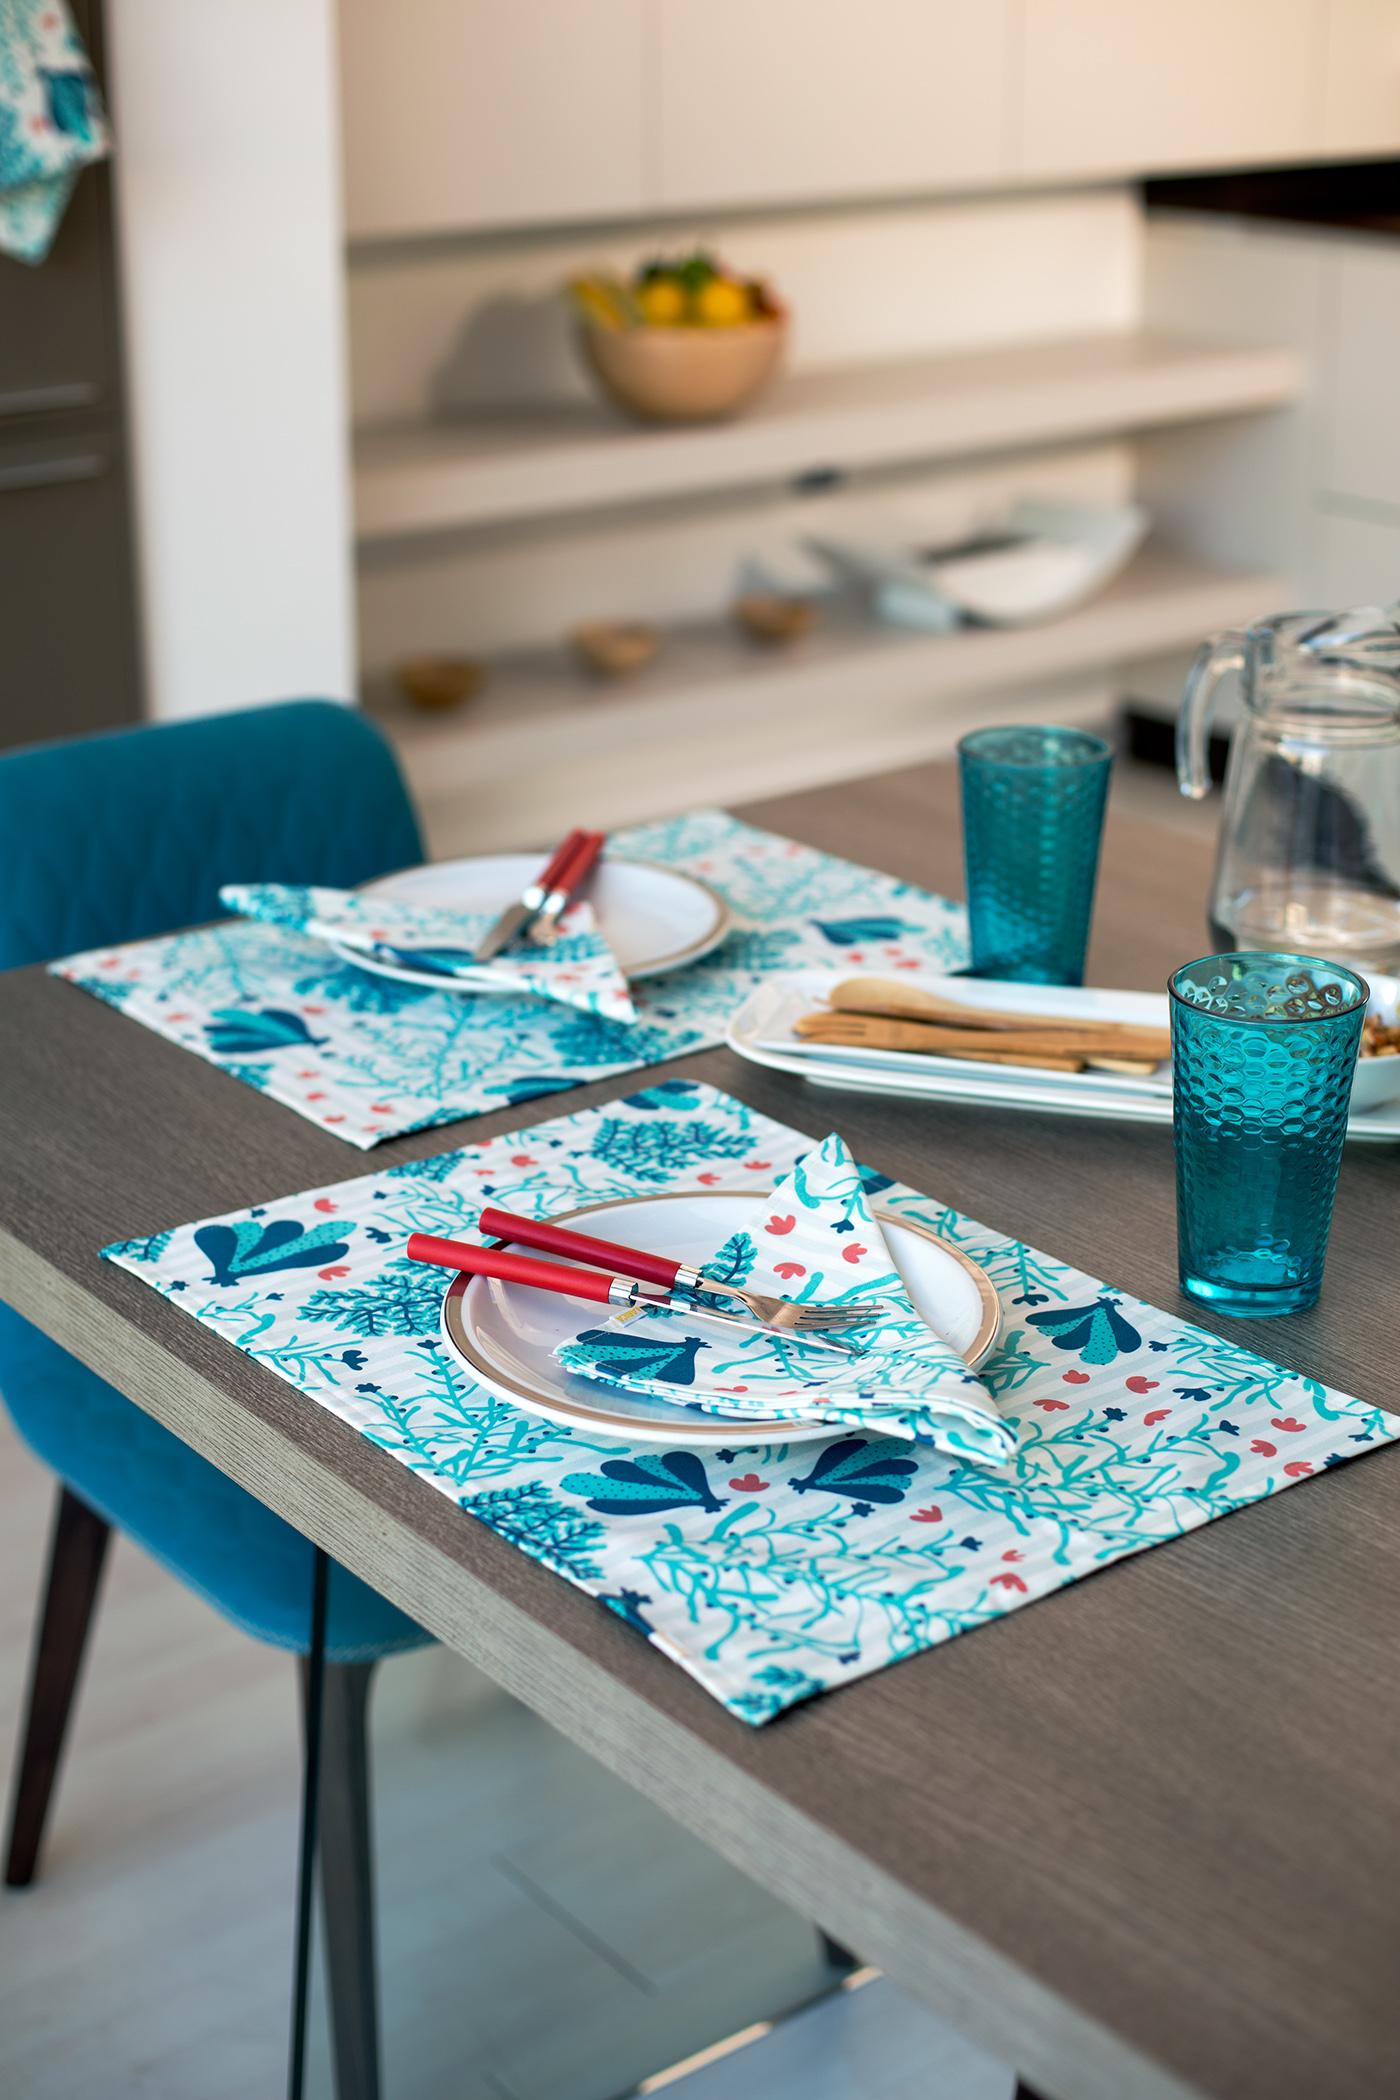 tableclothes kitchen mantelería pattern textil print estampado summer